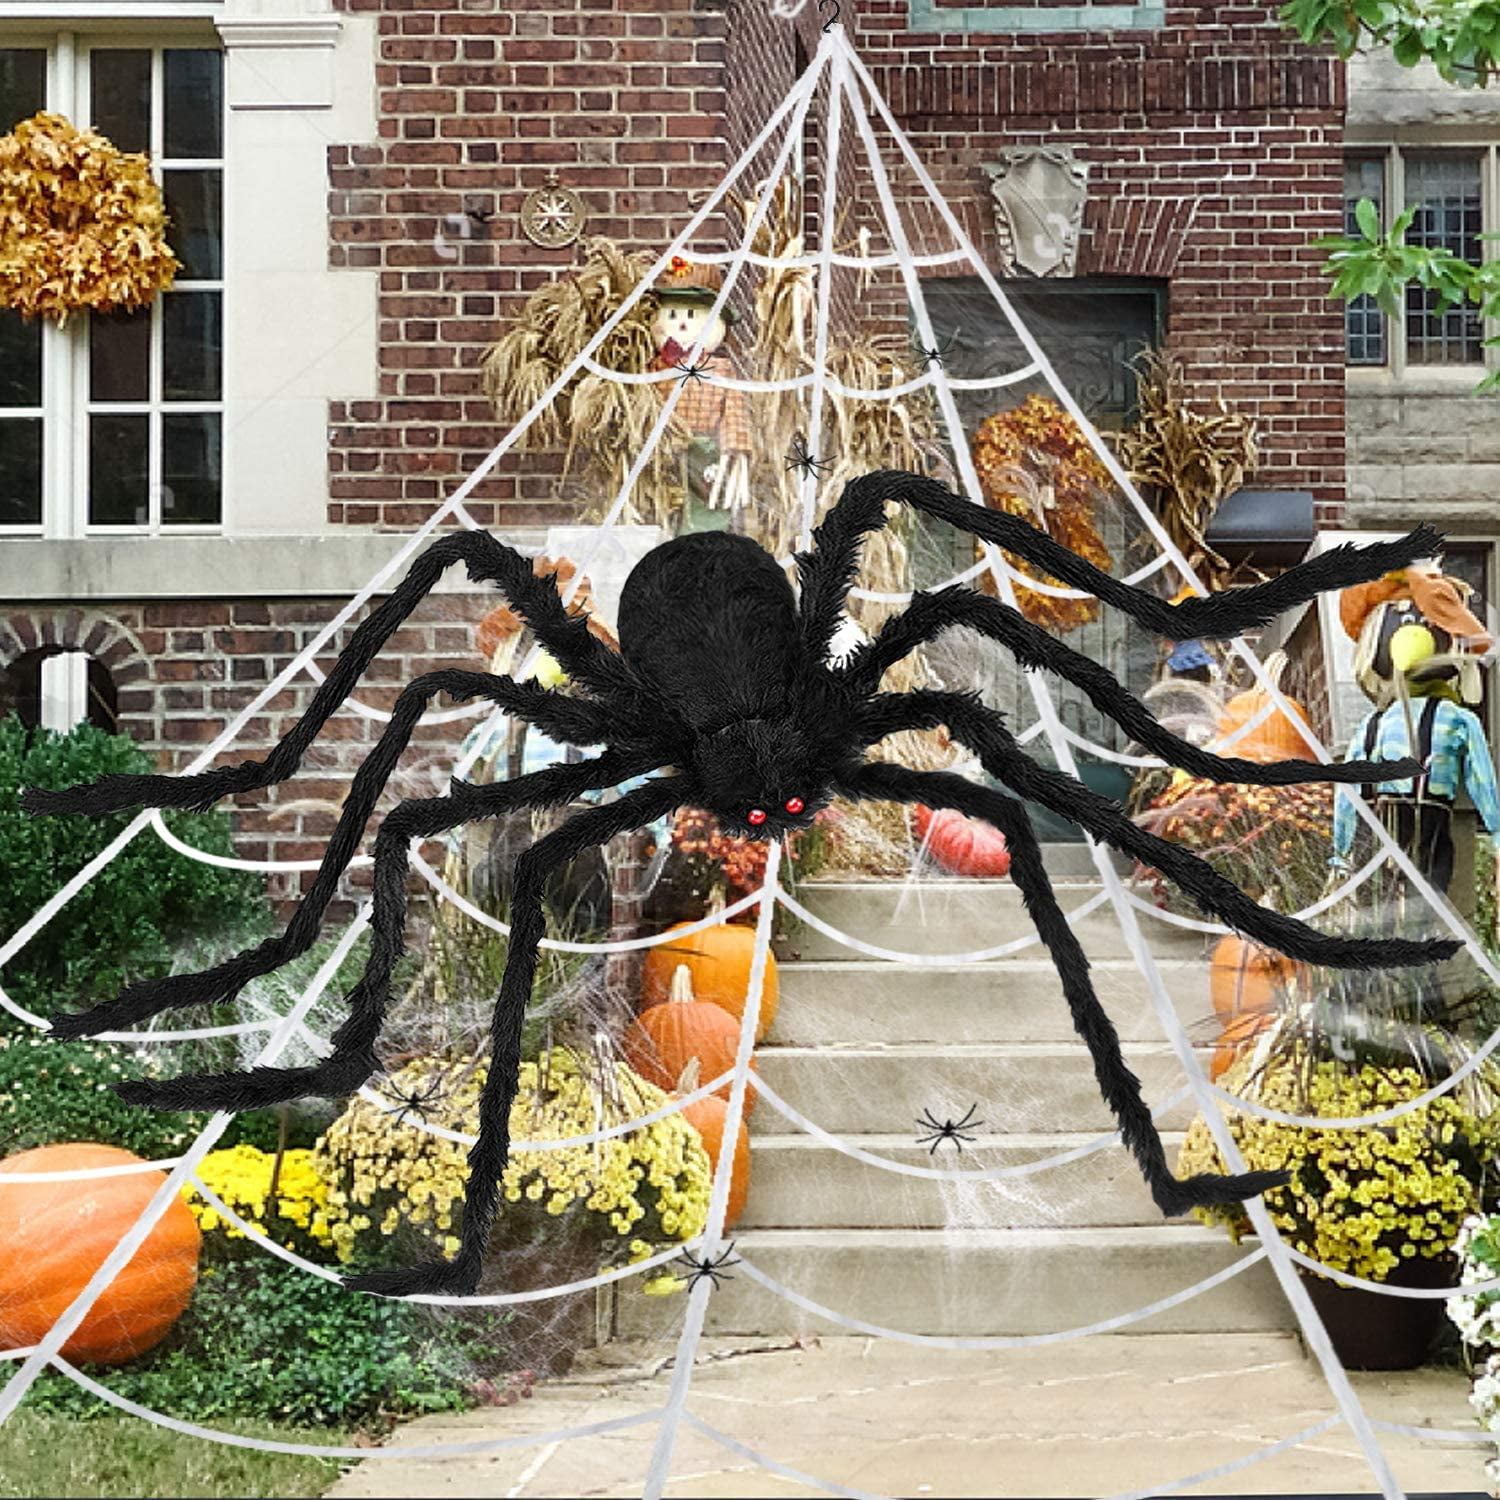 330 sqft Halloween Stretch Spider Webs for Indoor O saraha Halloween Spider Web 